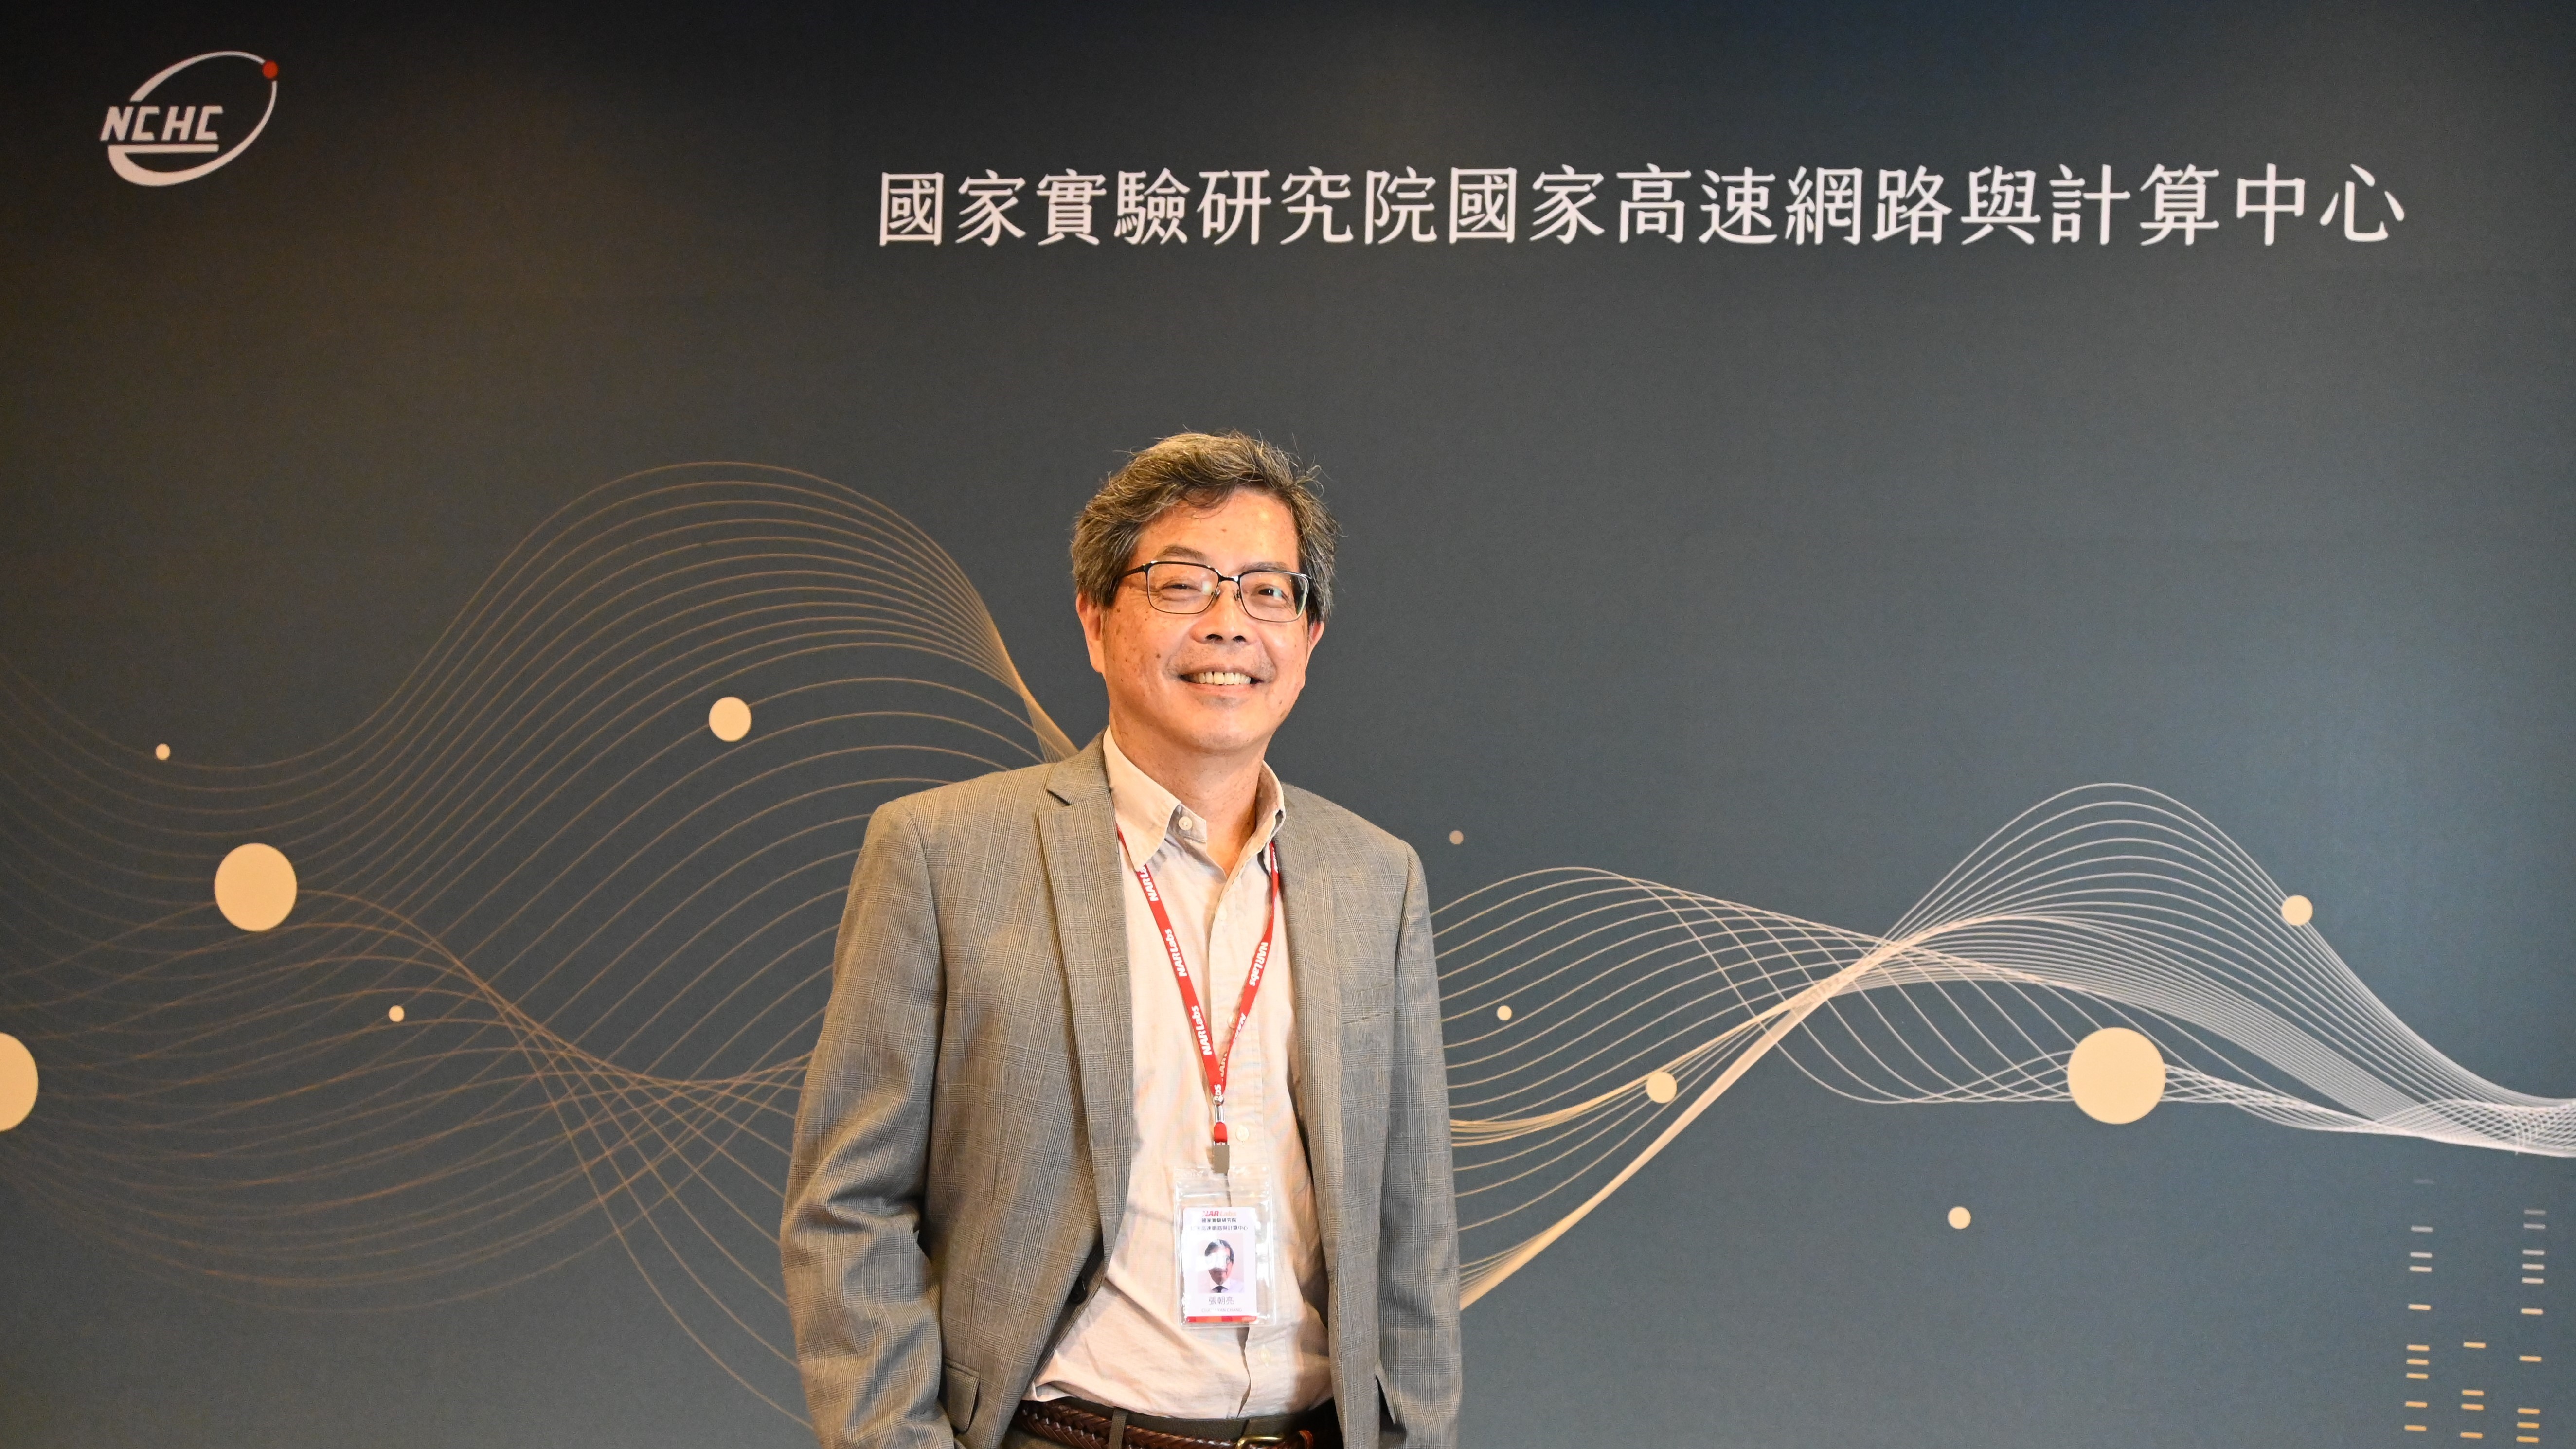 Director General Chau-lyan Chang: Enhancing Big Data, Boosting Tech Innovation and Industrial Transformation through HPC